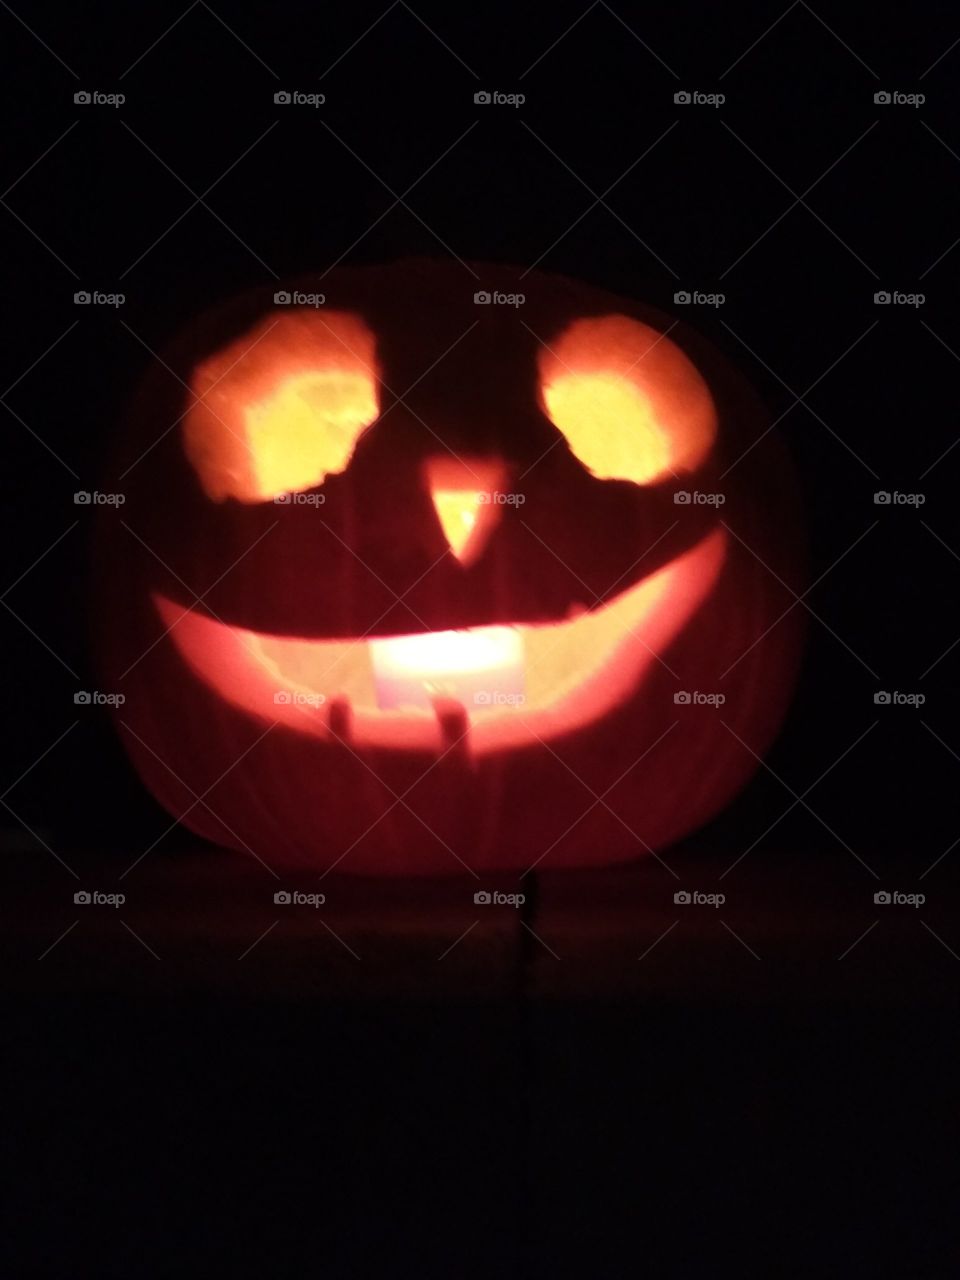 My seconds pumpkin! Halloween 2018